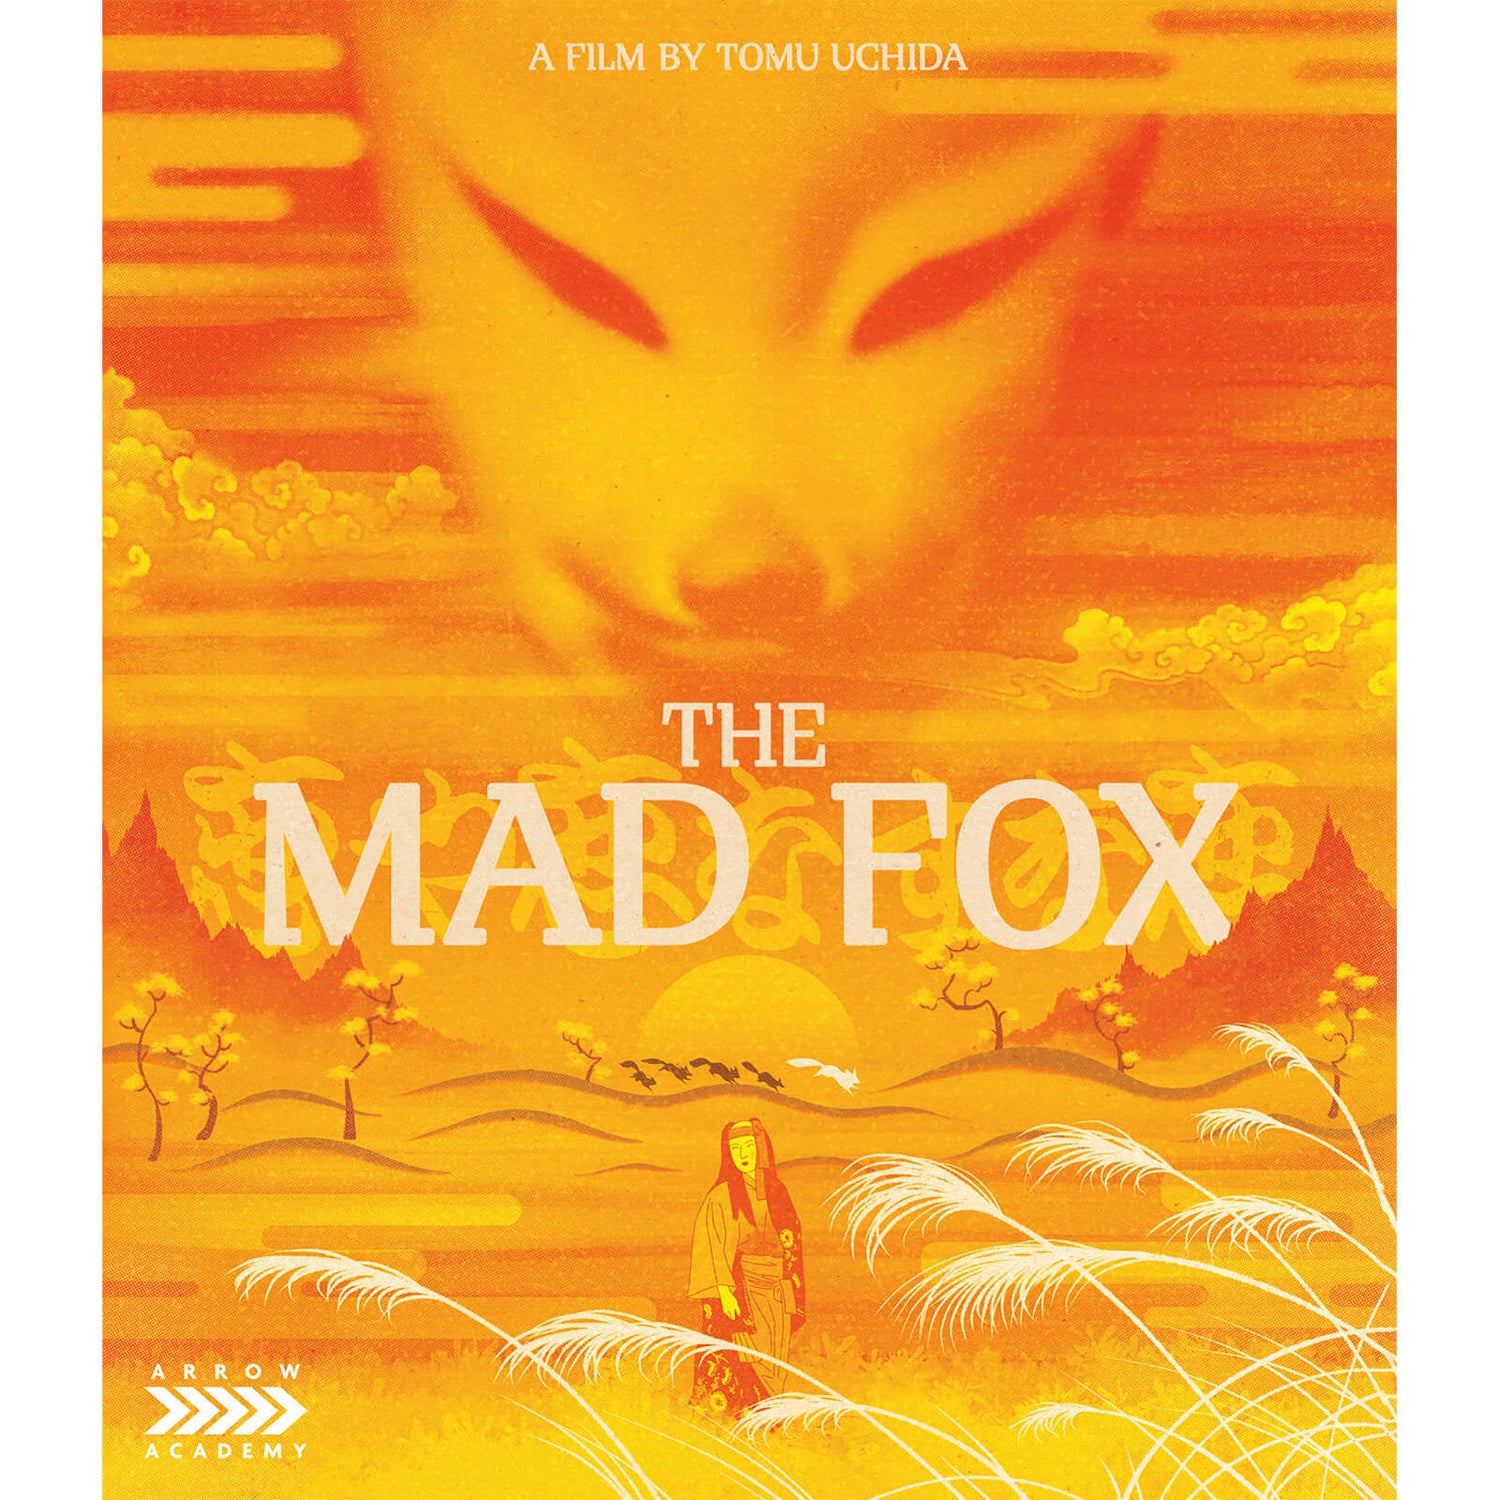 The Mad Fox Blu-ray